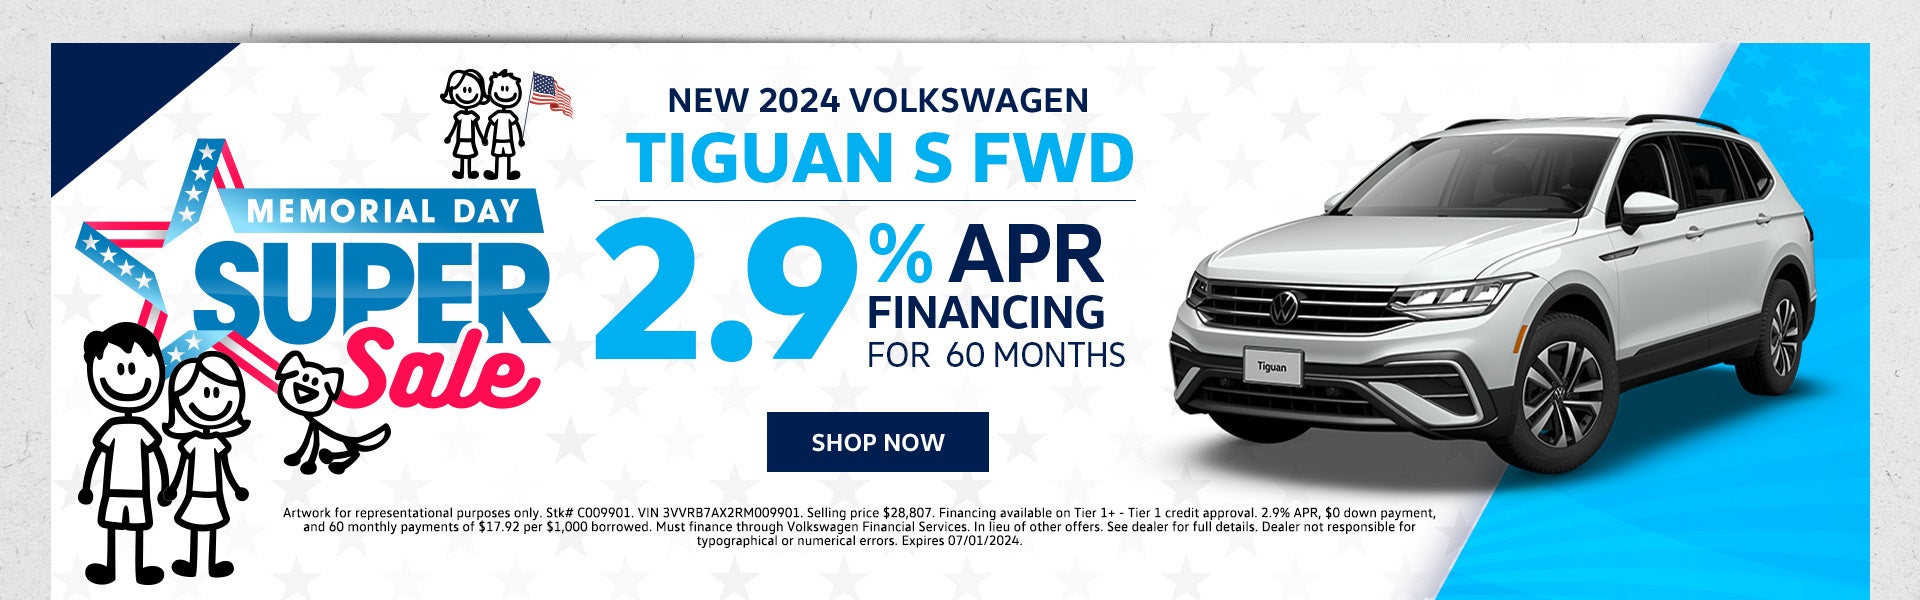 New 2024 VW Tiguan S FWD